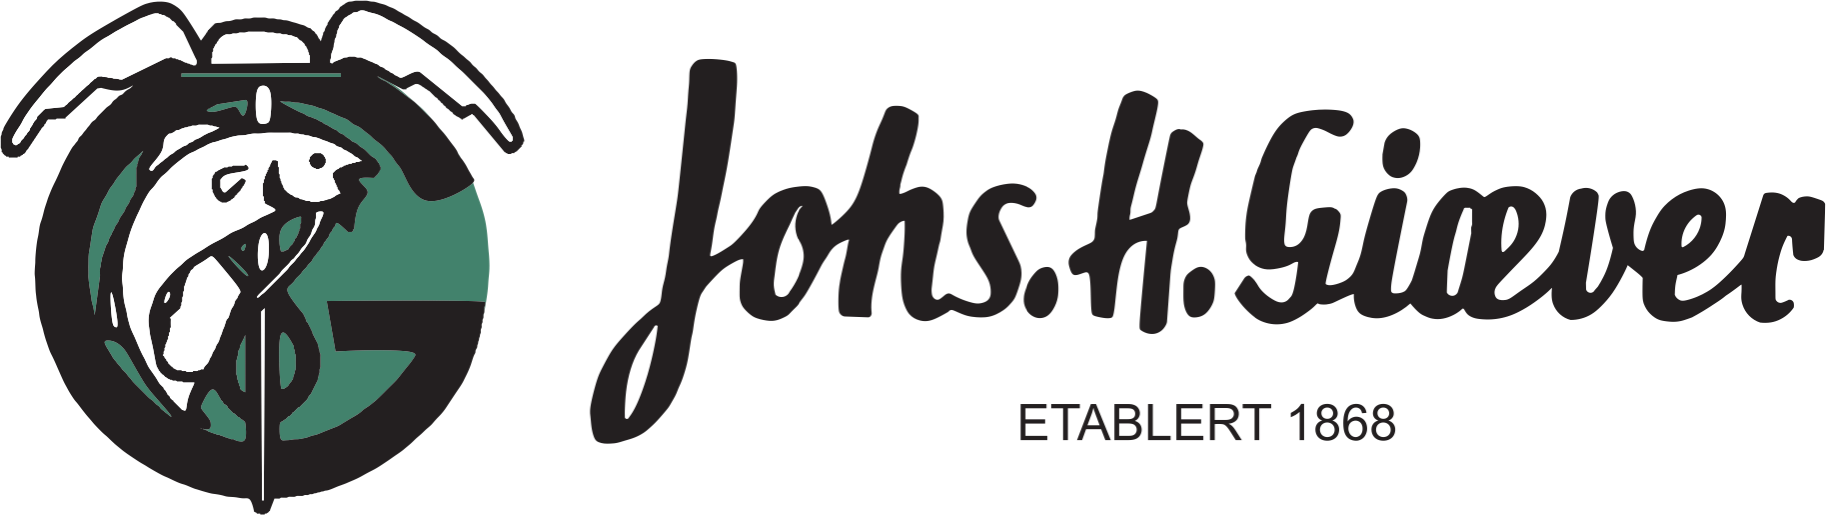 Johs H Giæver AS Logo